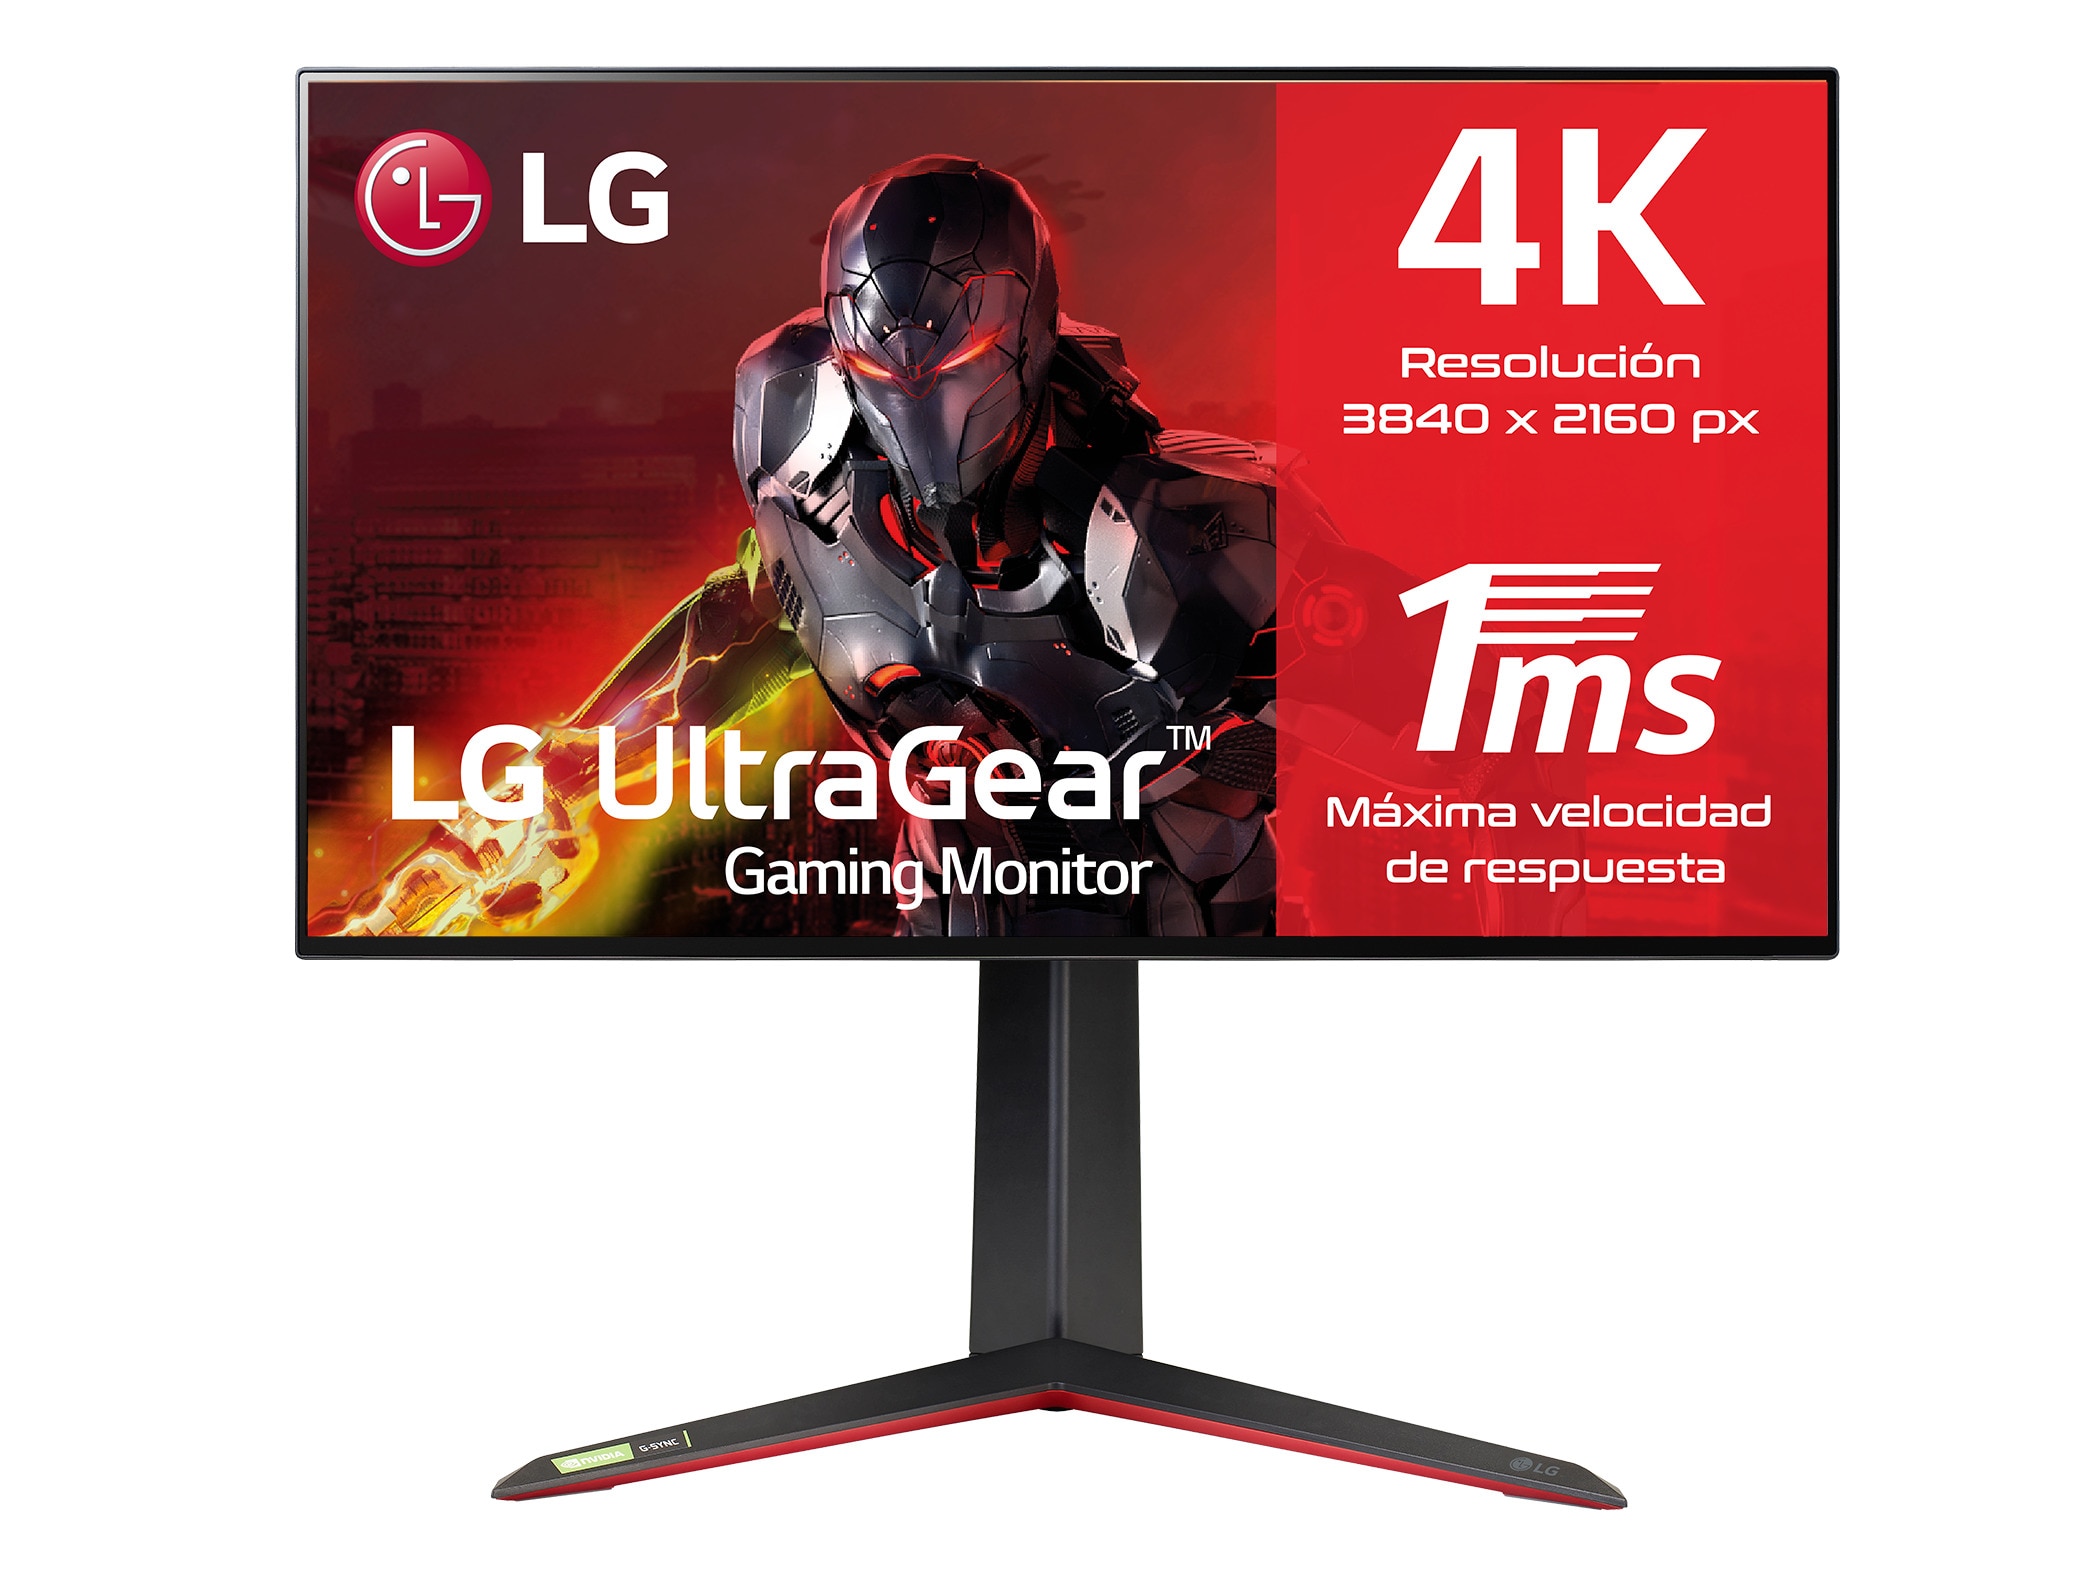 LG  LG 27GP950-B - Monitor Gaming LG UltraGear (Panel NanoIPS: 3840x2160, 400nit, 1000:1, DCI-P3>98%, 1ms); diag. 68,47cm; entr.: HDMI 2.1 x2, DPx1, USB-Ax3; AMD Freesync G-Sync Compatible, Vista frontal, 27GP950-B